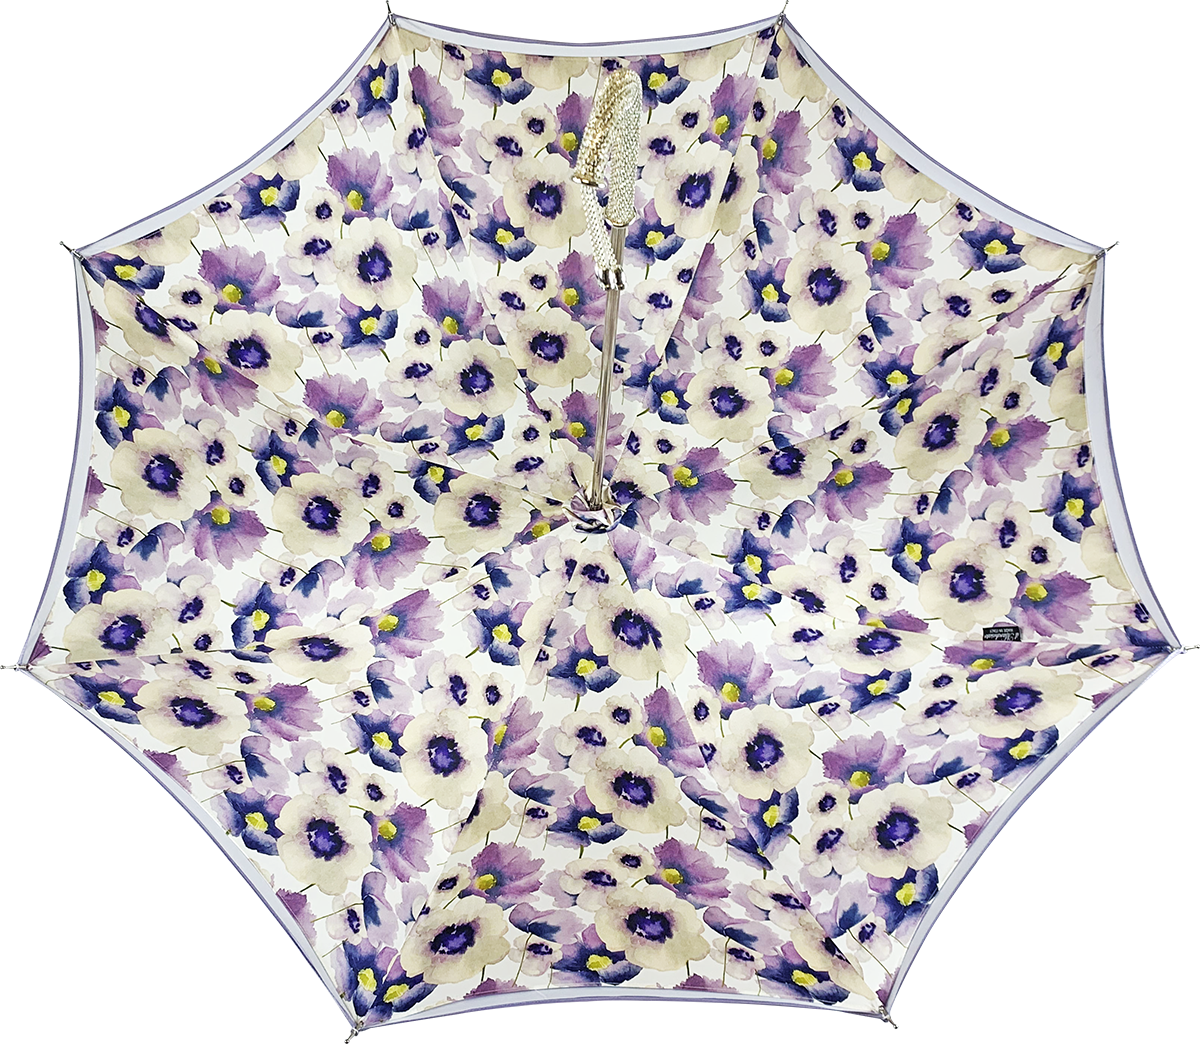 Sparkling Lilac Umbrella with Anemones